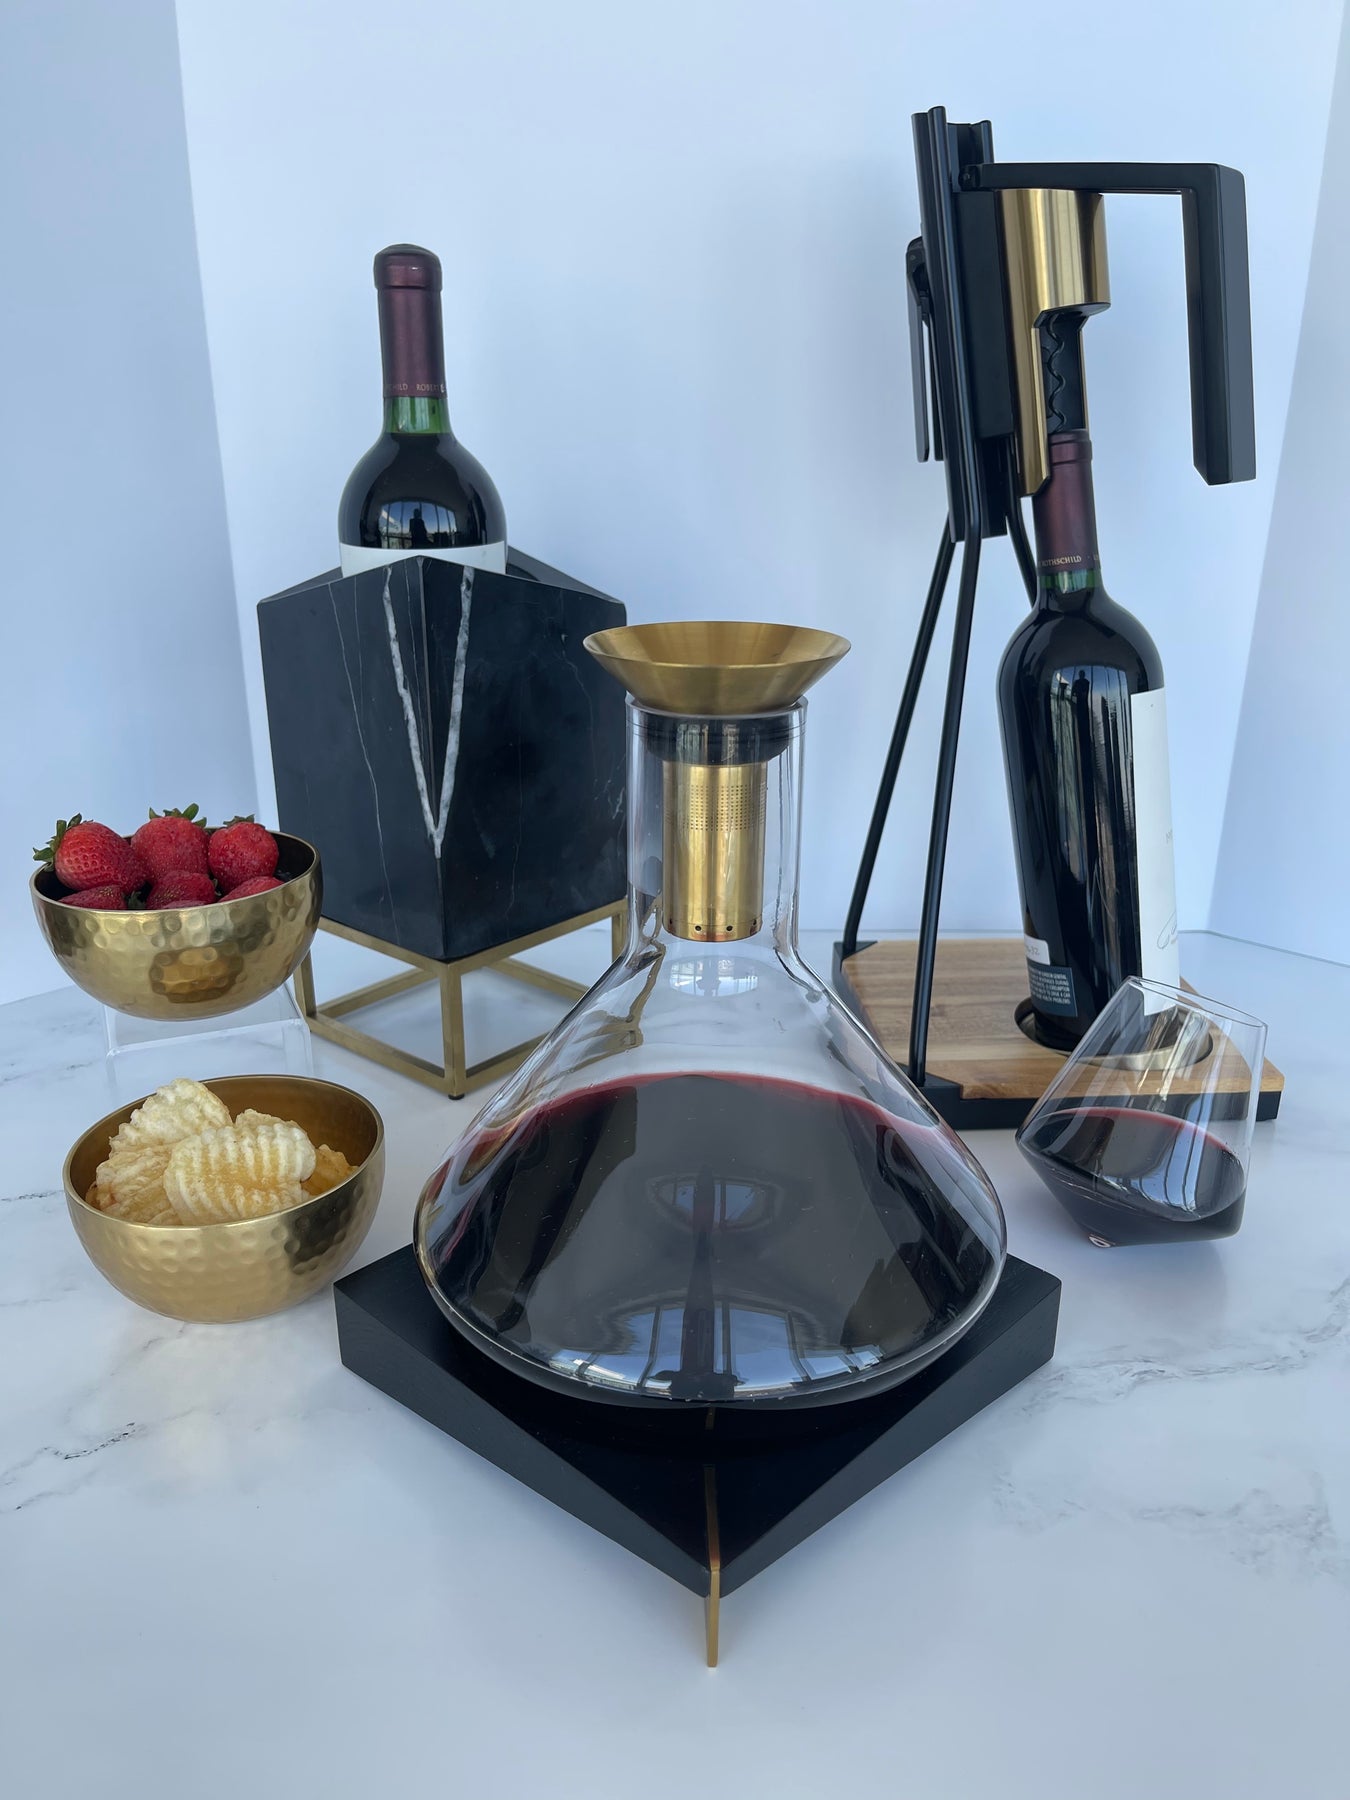 Abstract Style Wine Decanter - MASU